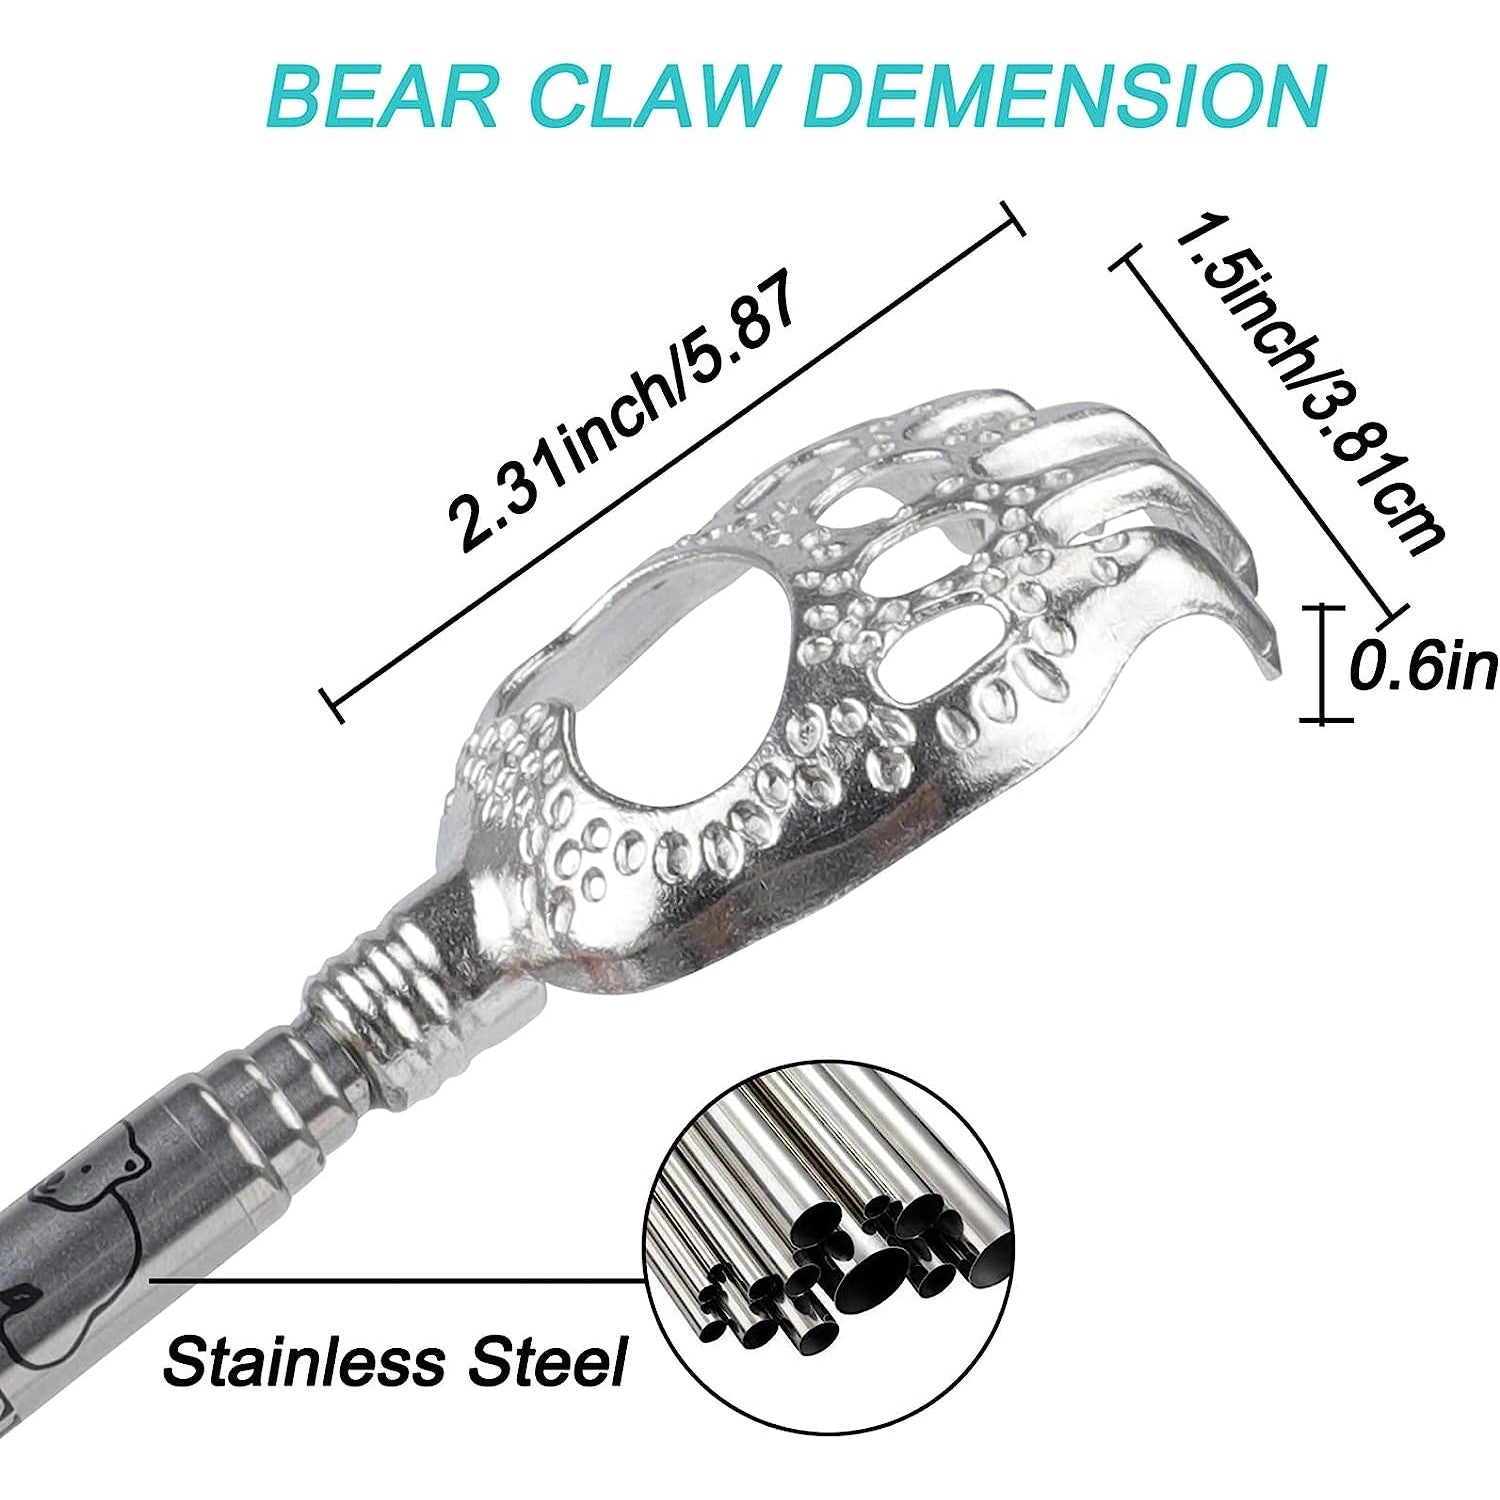 An extendable back scratcher with a bear claw design.